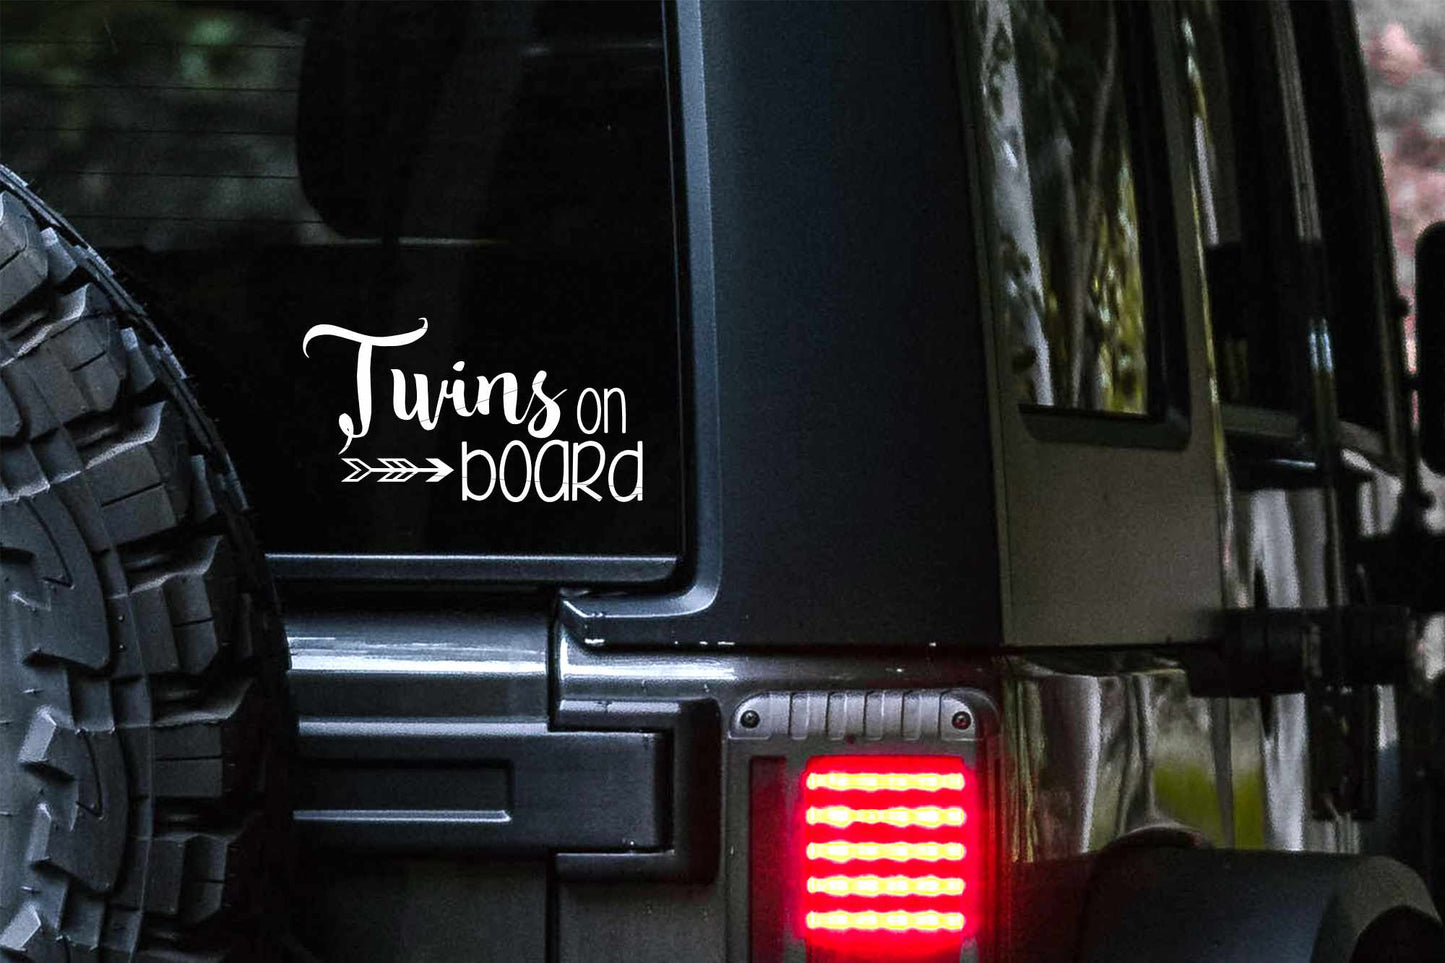 Twins on board Car Decal | Safety Bumper Sticker